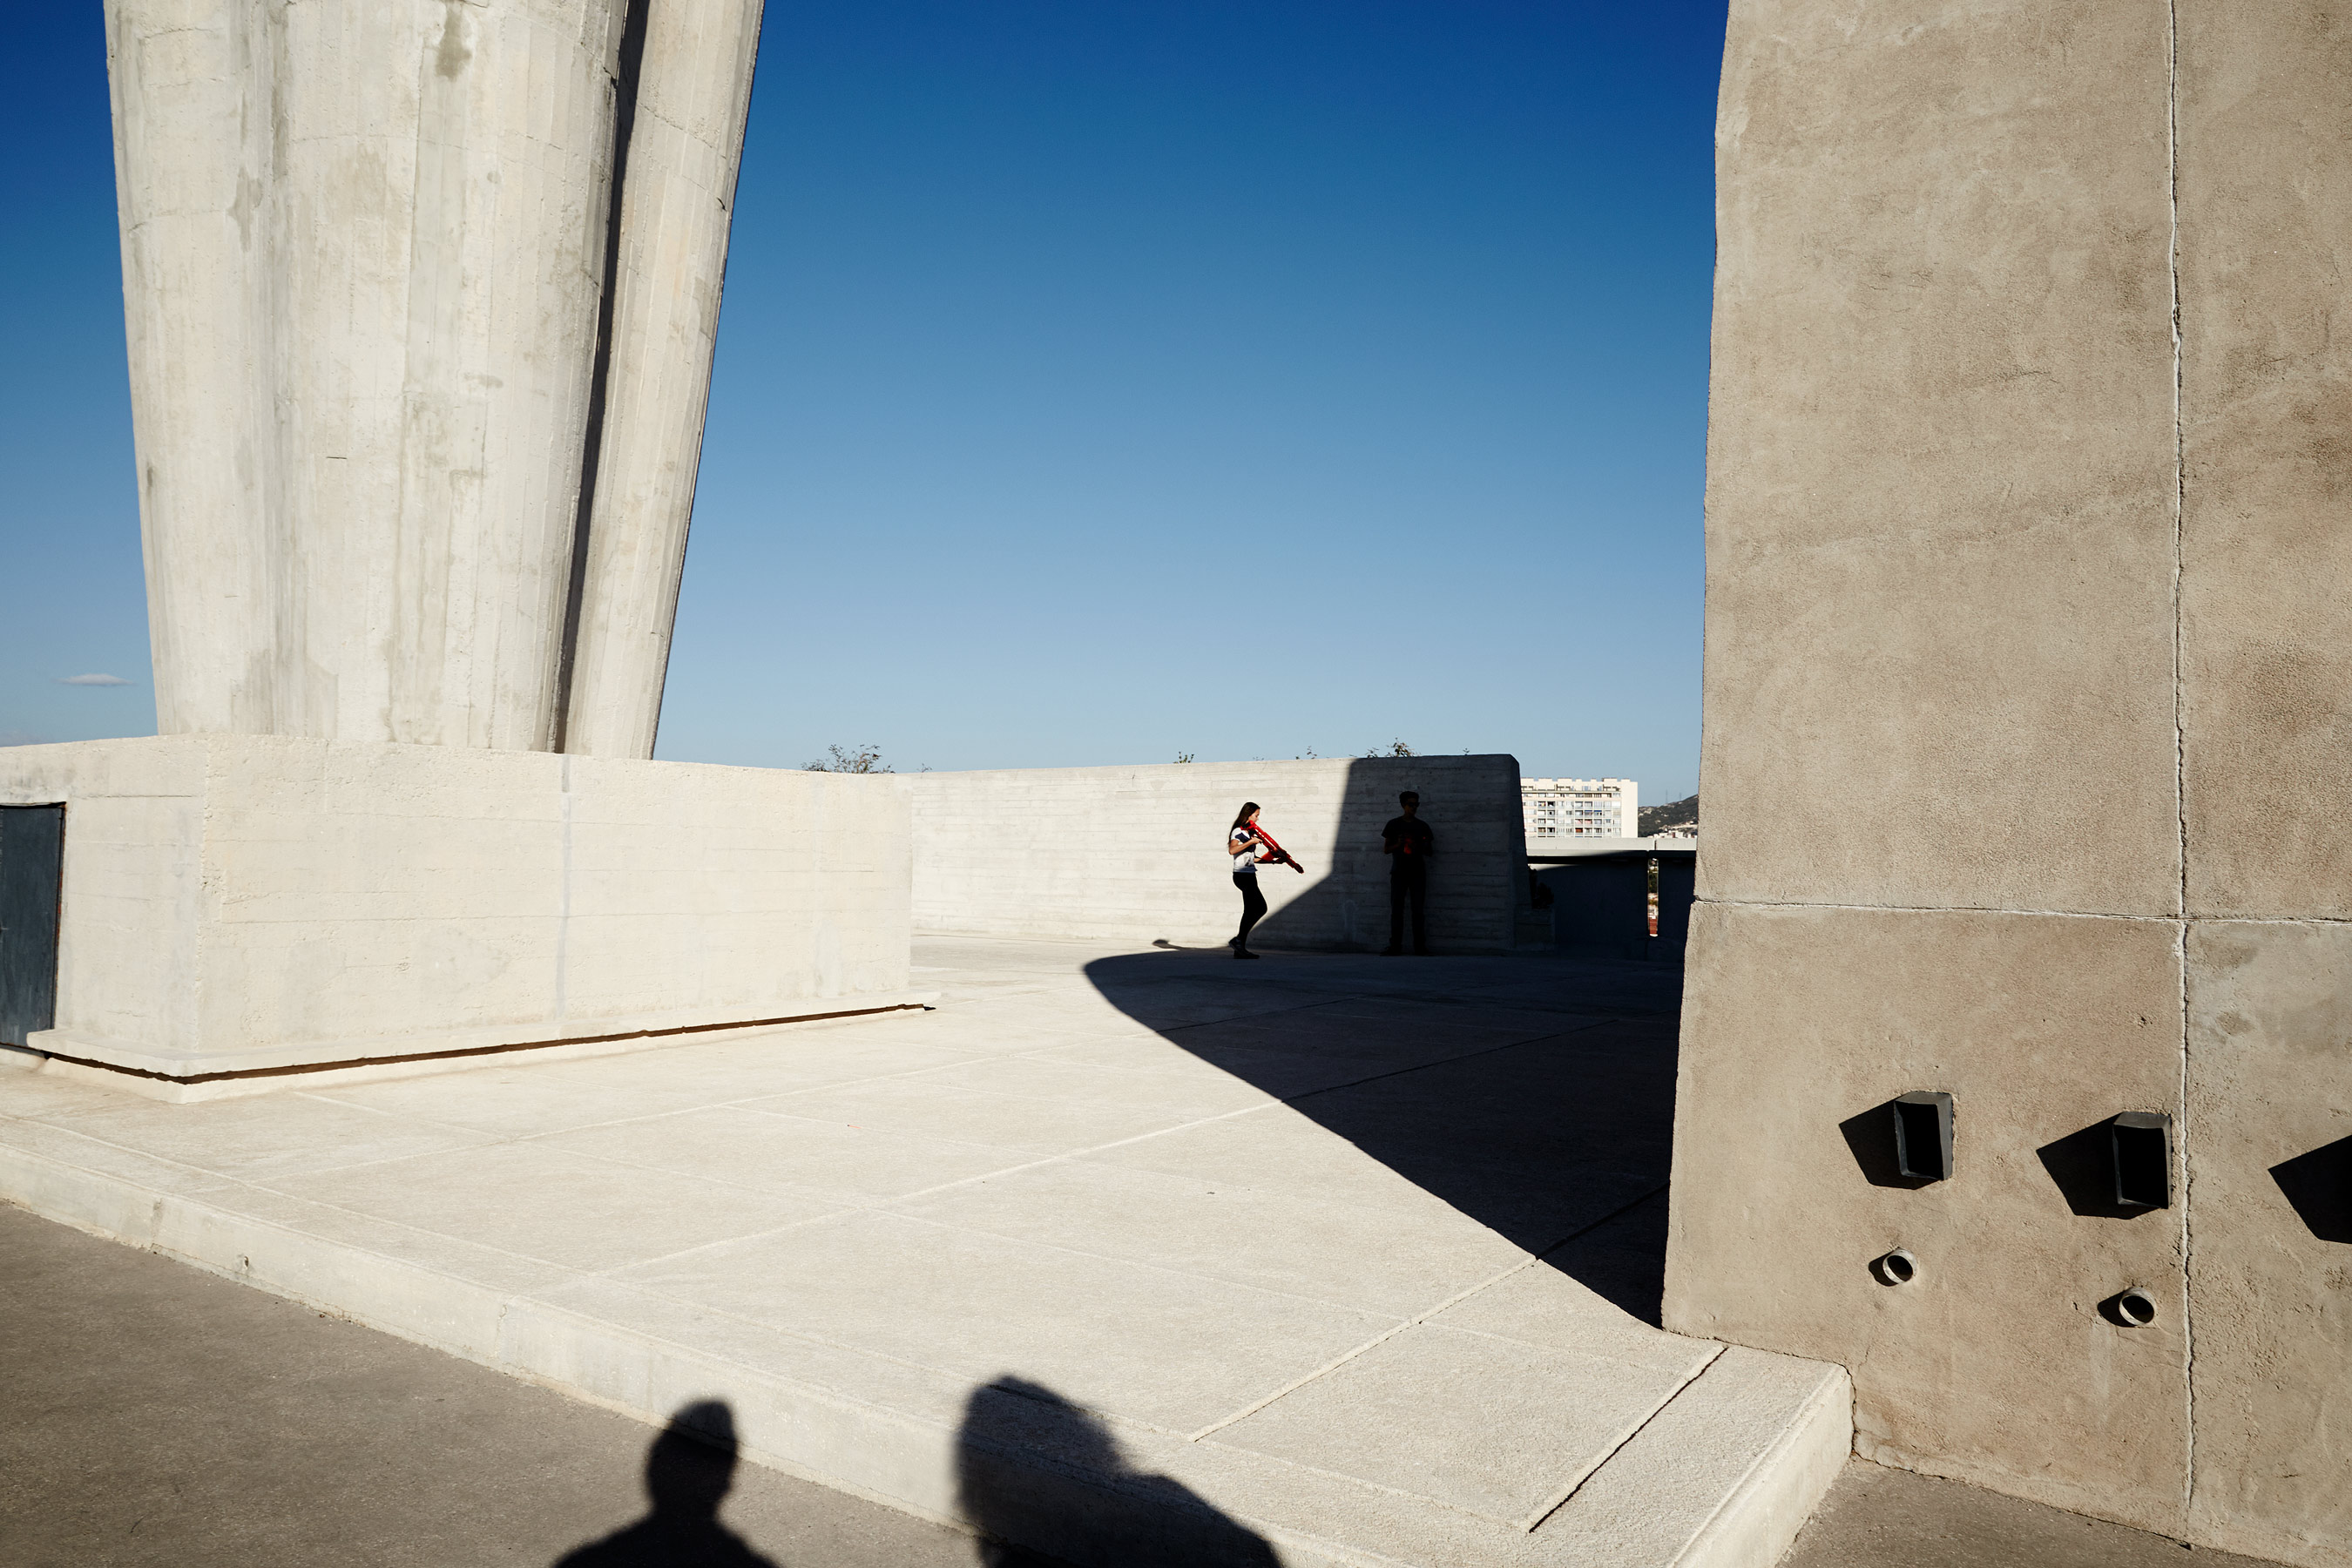 Cite of Le Corbusier in Marseille, shadows